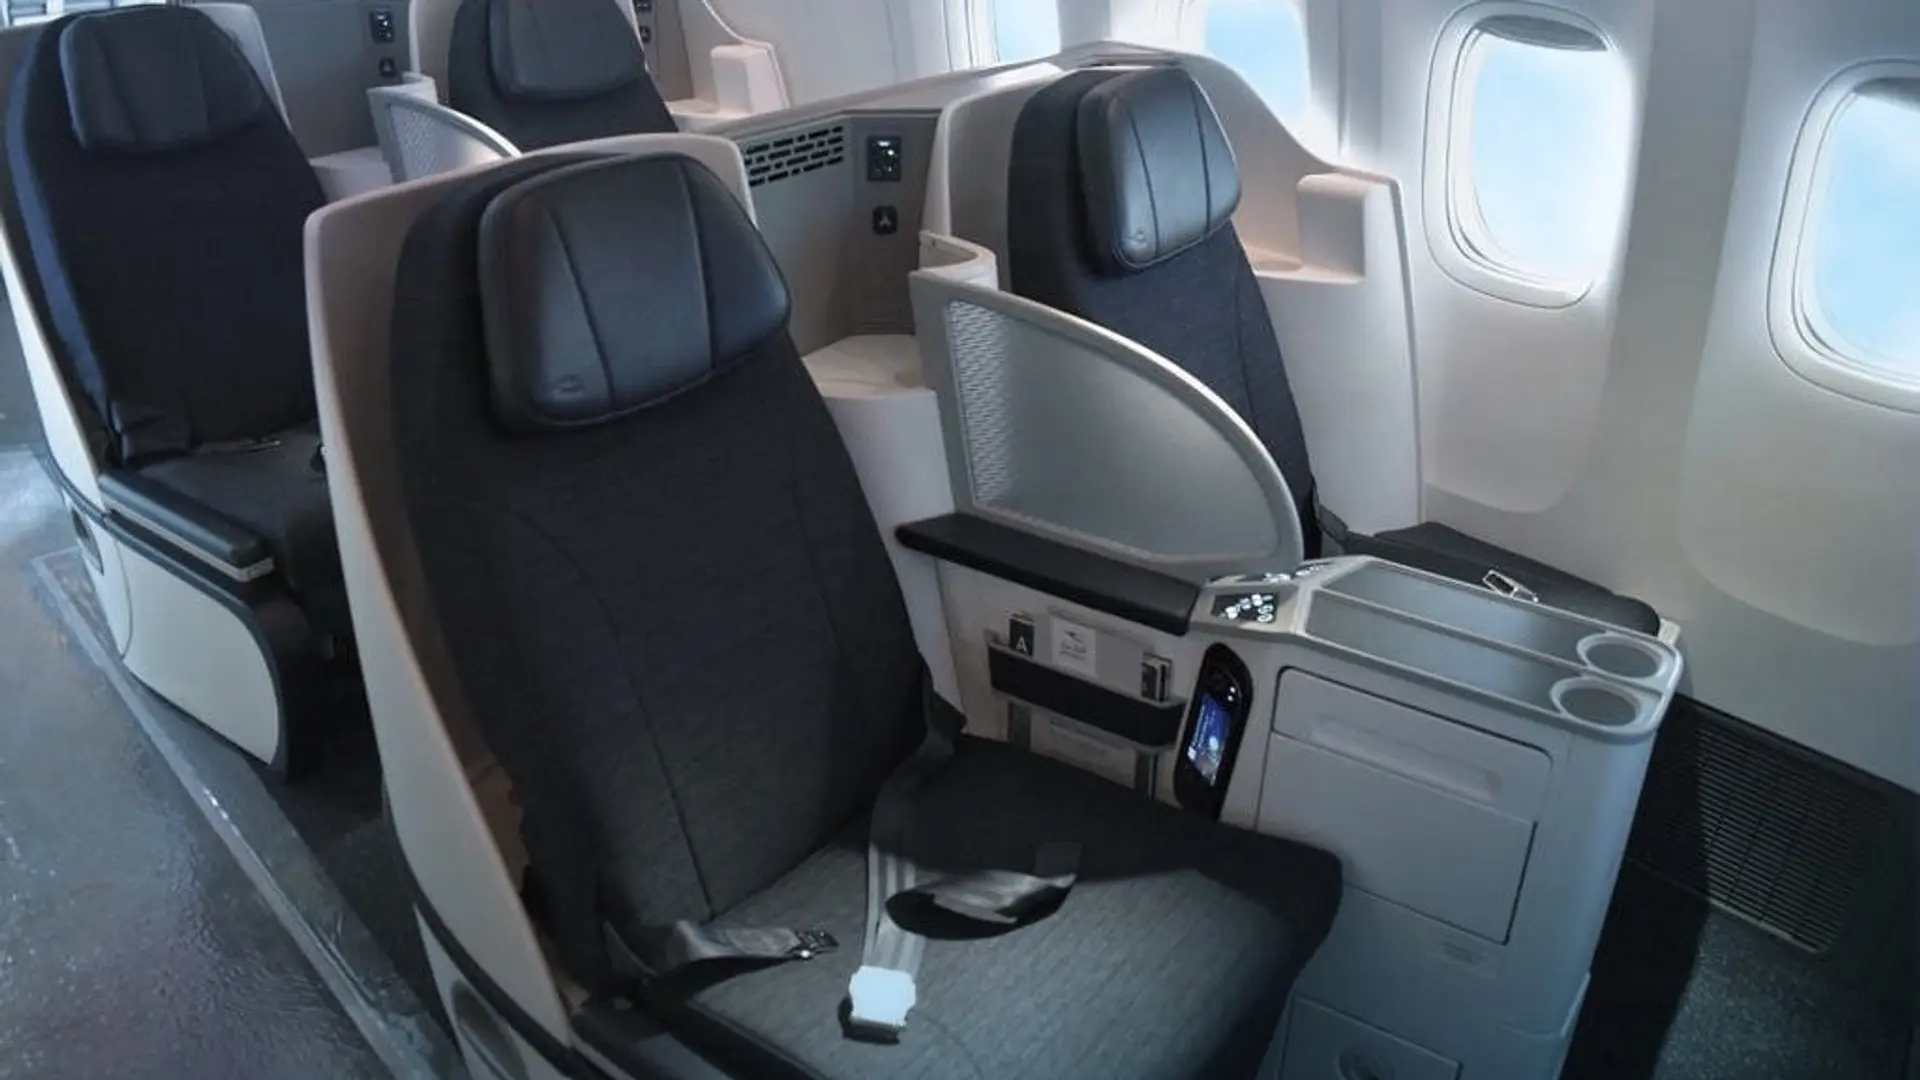 Airline review Cabin & Seat - Kuwait Airways - 0